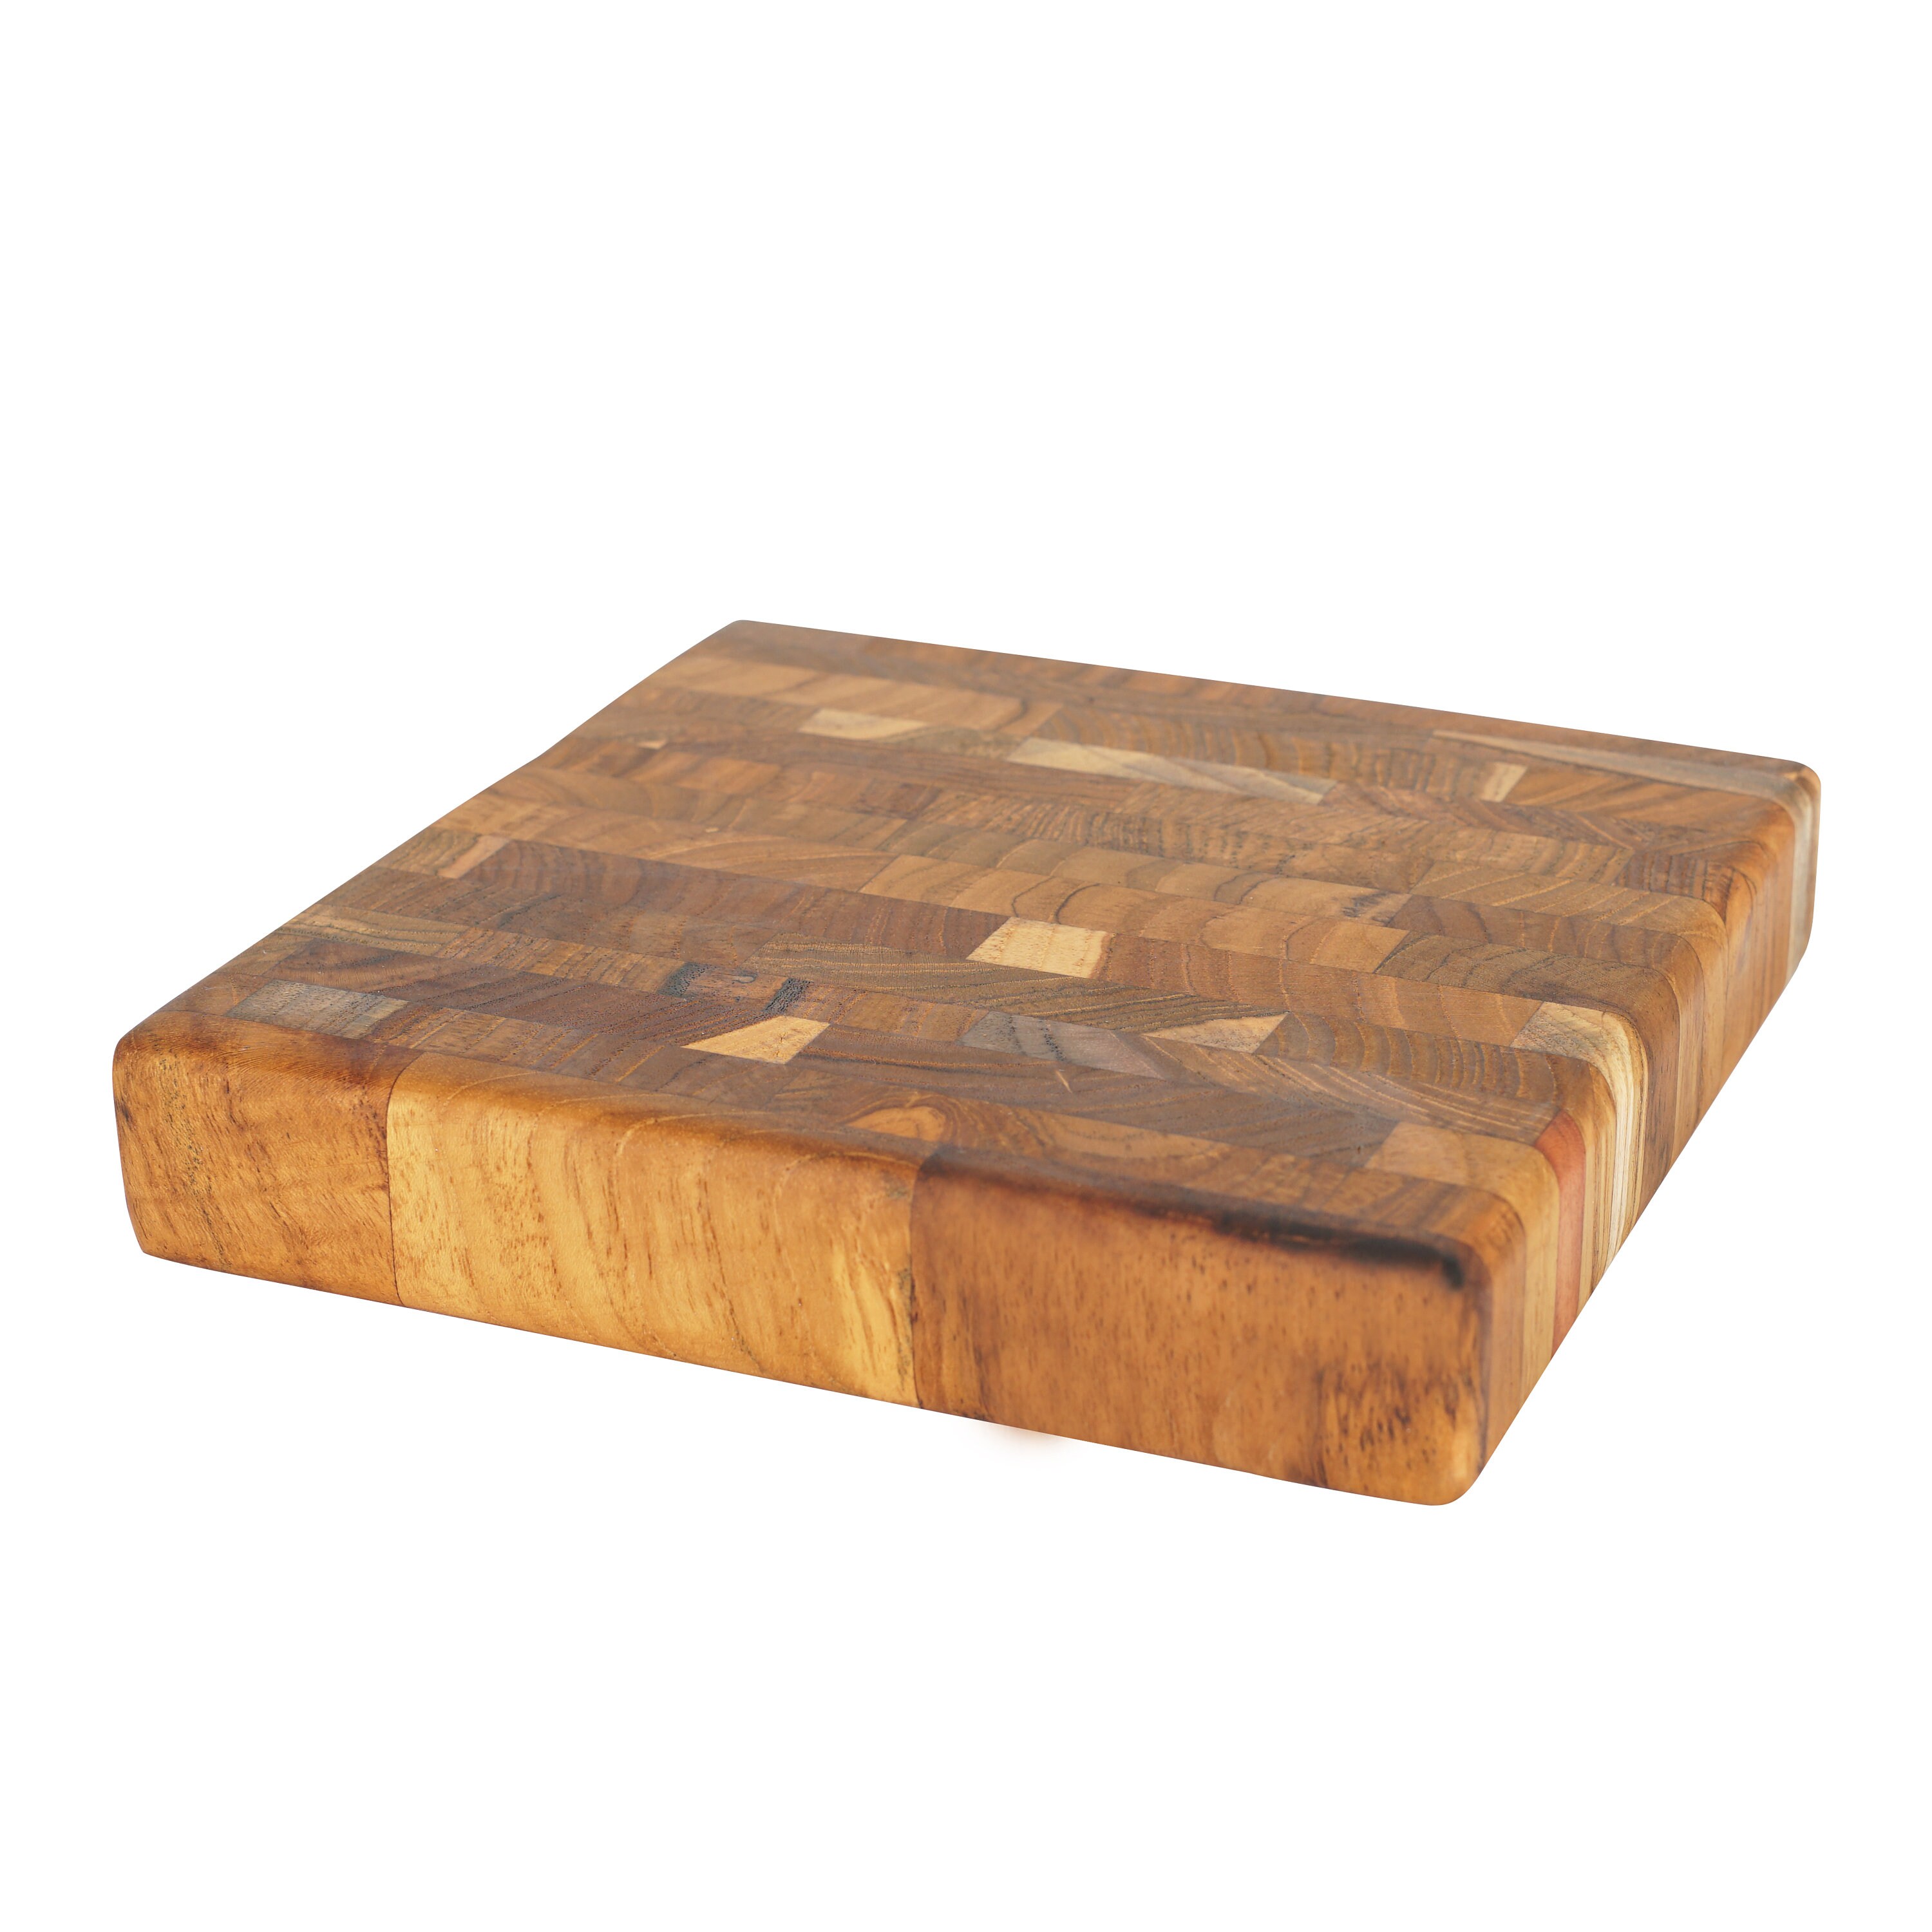 Thyme & Table Acacia Wood Cutting Board, 2 Piece Set